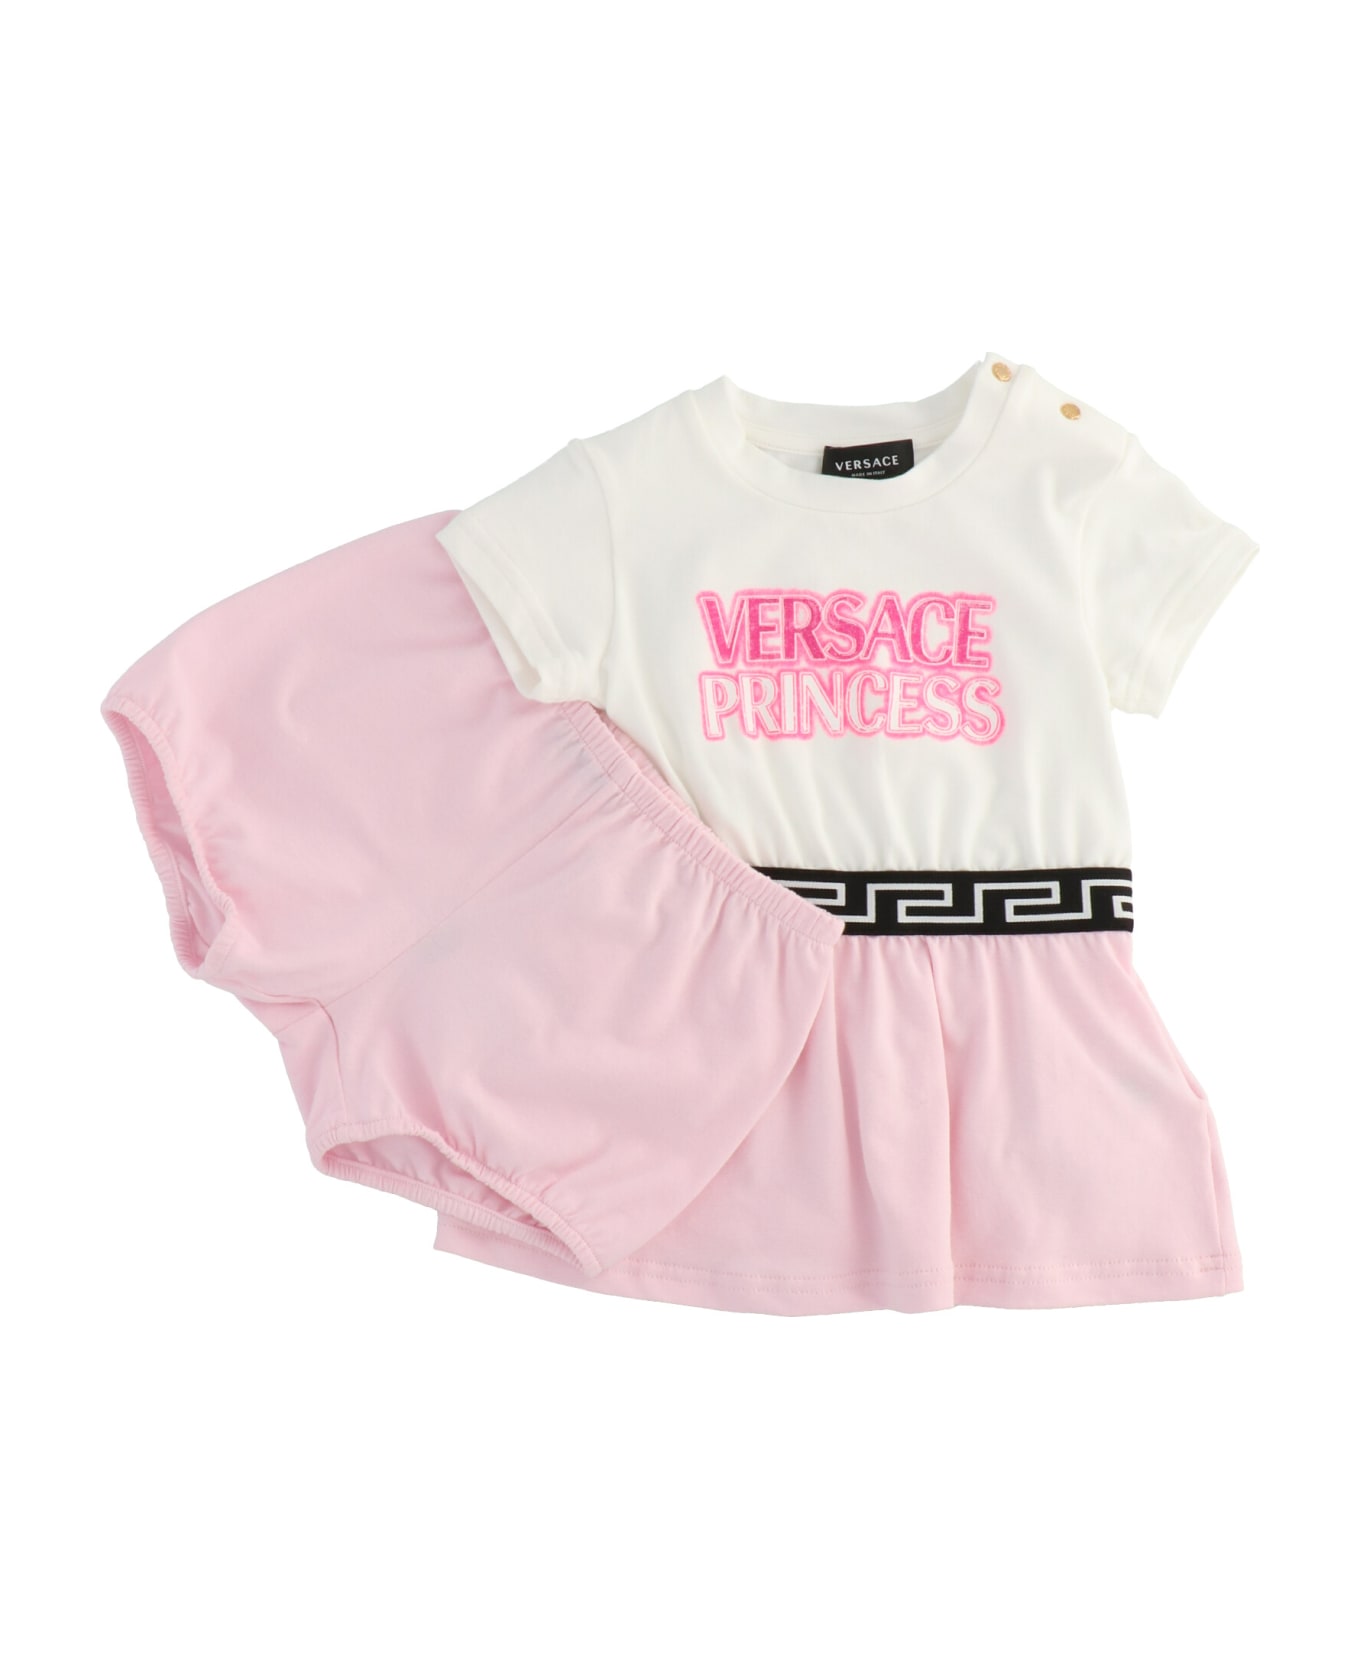 Versace 'versace Princess' Dress + Bloomers - Multicolor